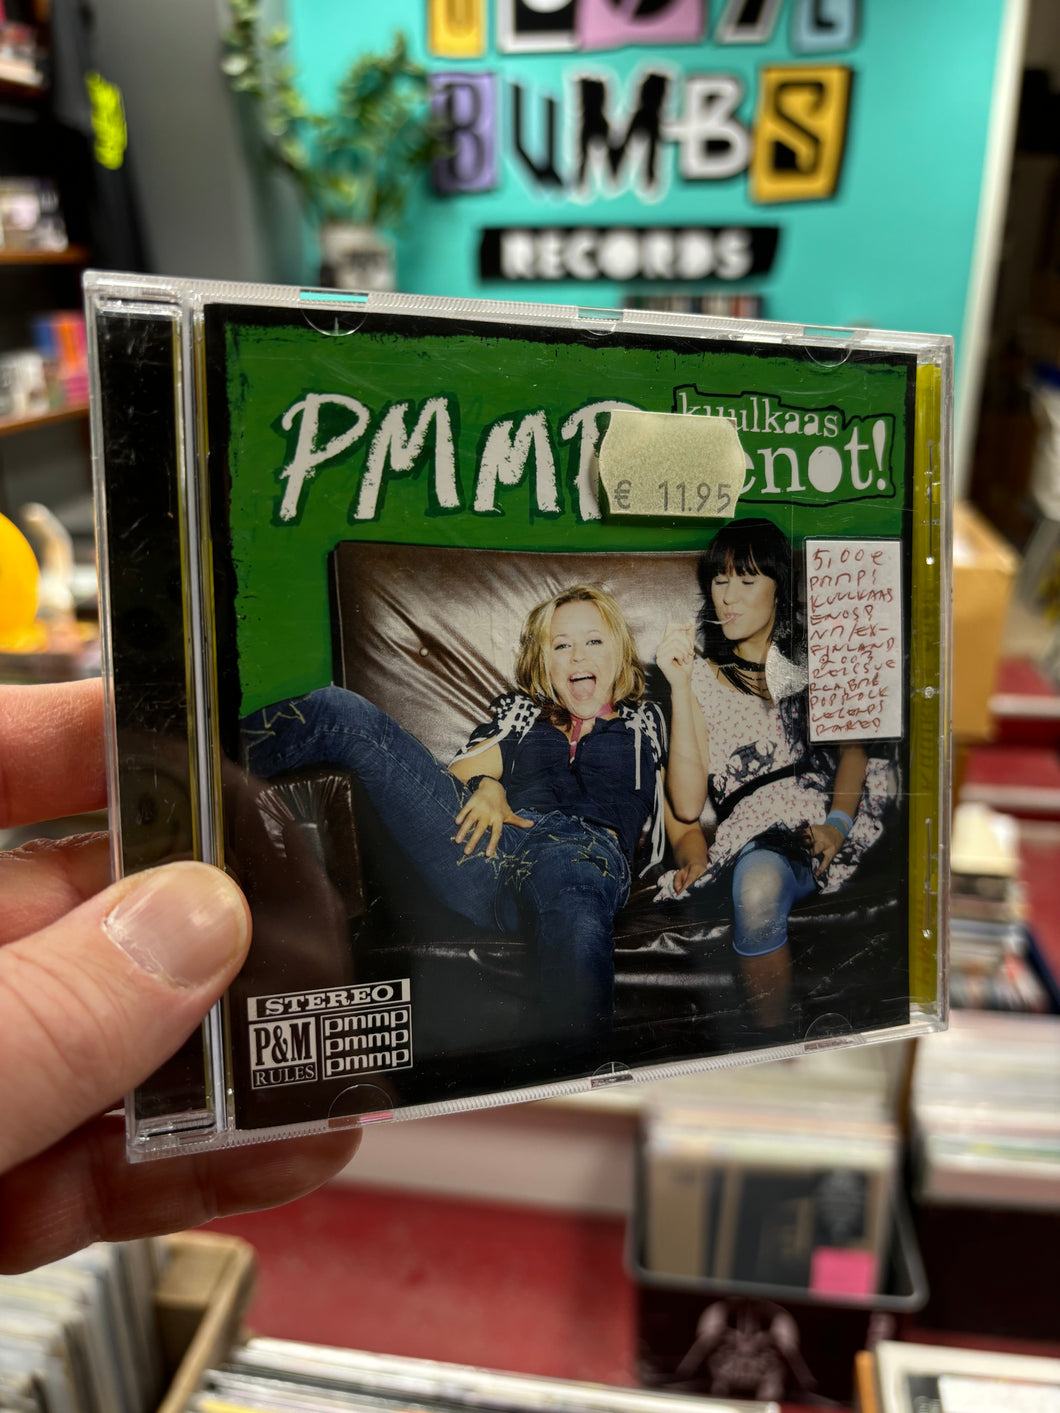 PMMP: Kuulkaas Enot!, CD, reissue, Finland 2003